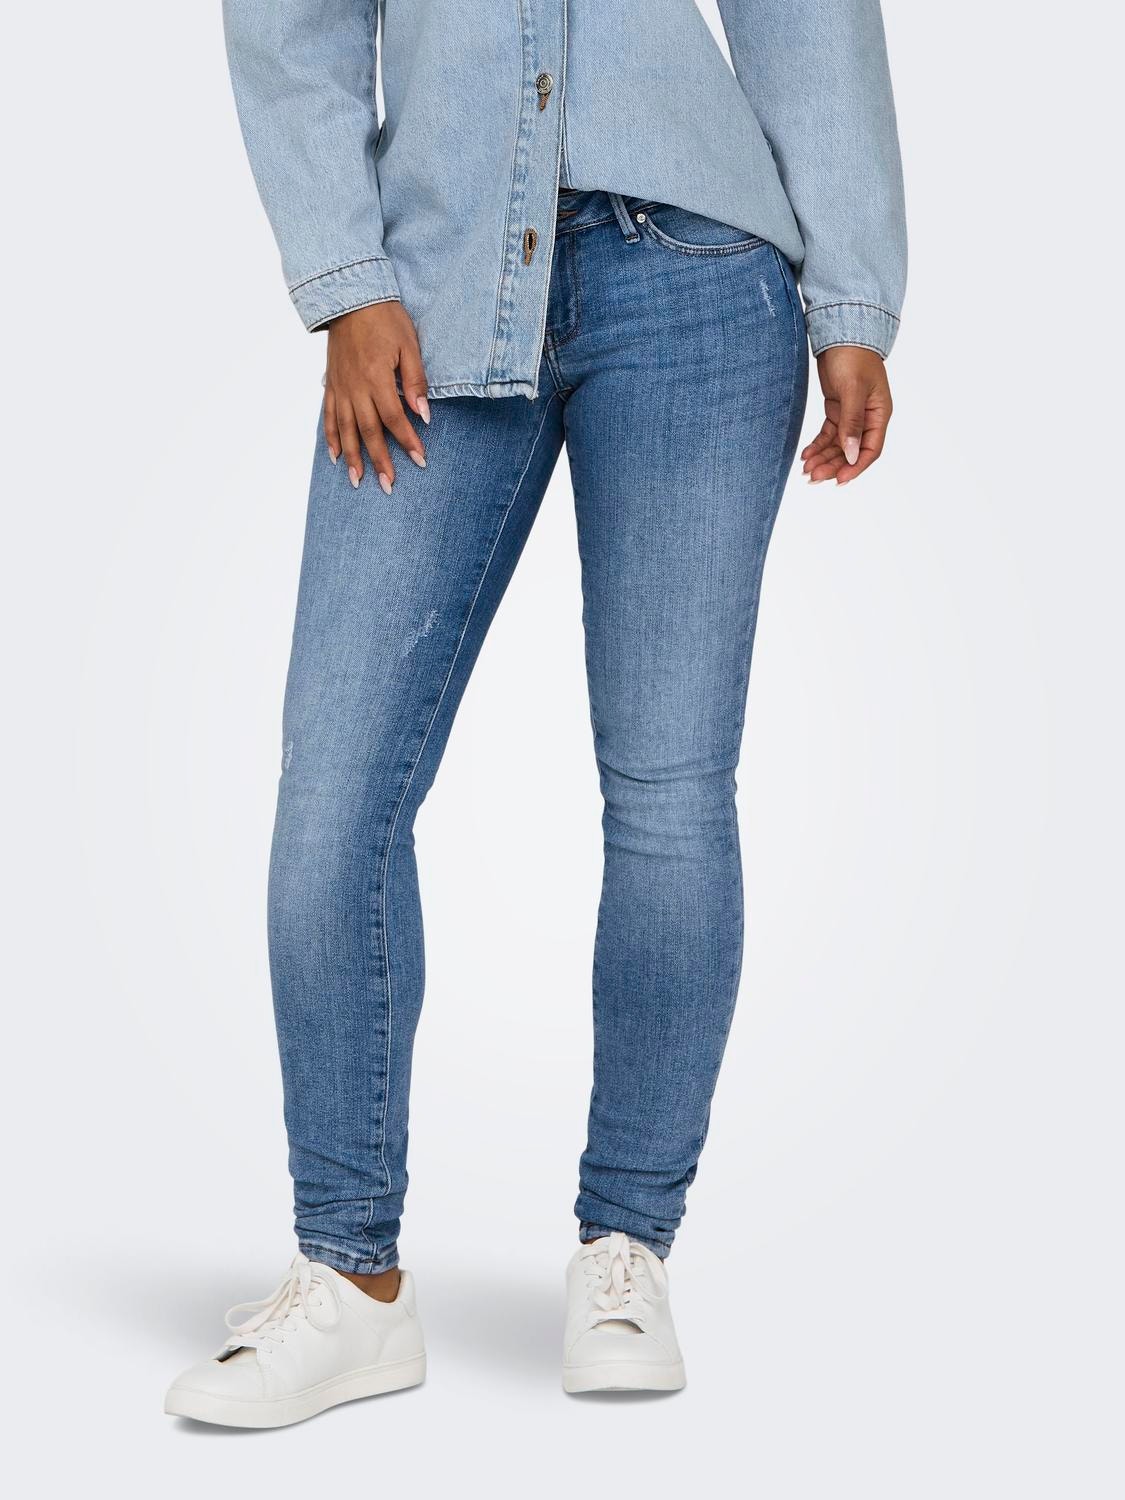 ONLY Skinny fit Super low waist Jeans -Light Blue Denim - 15328175